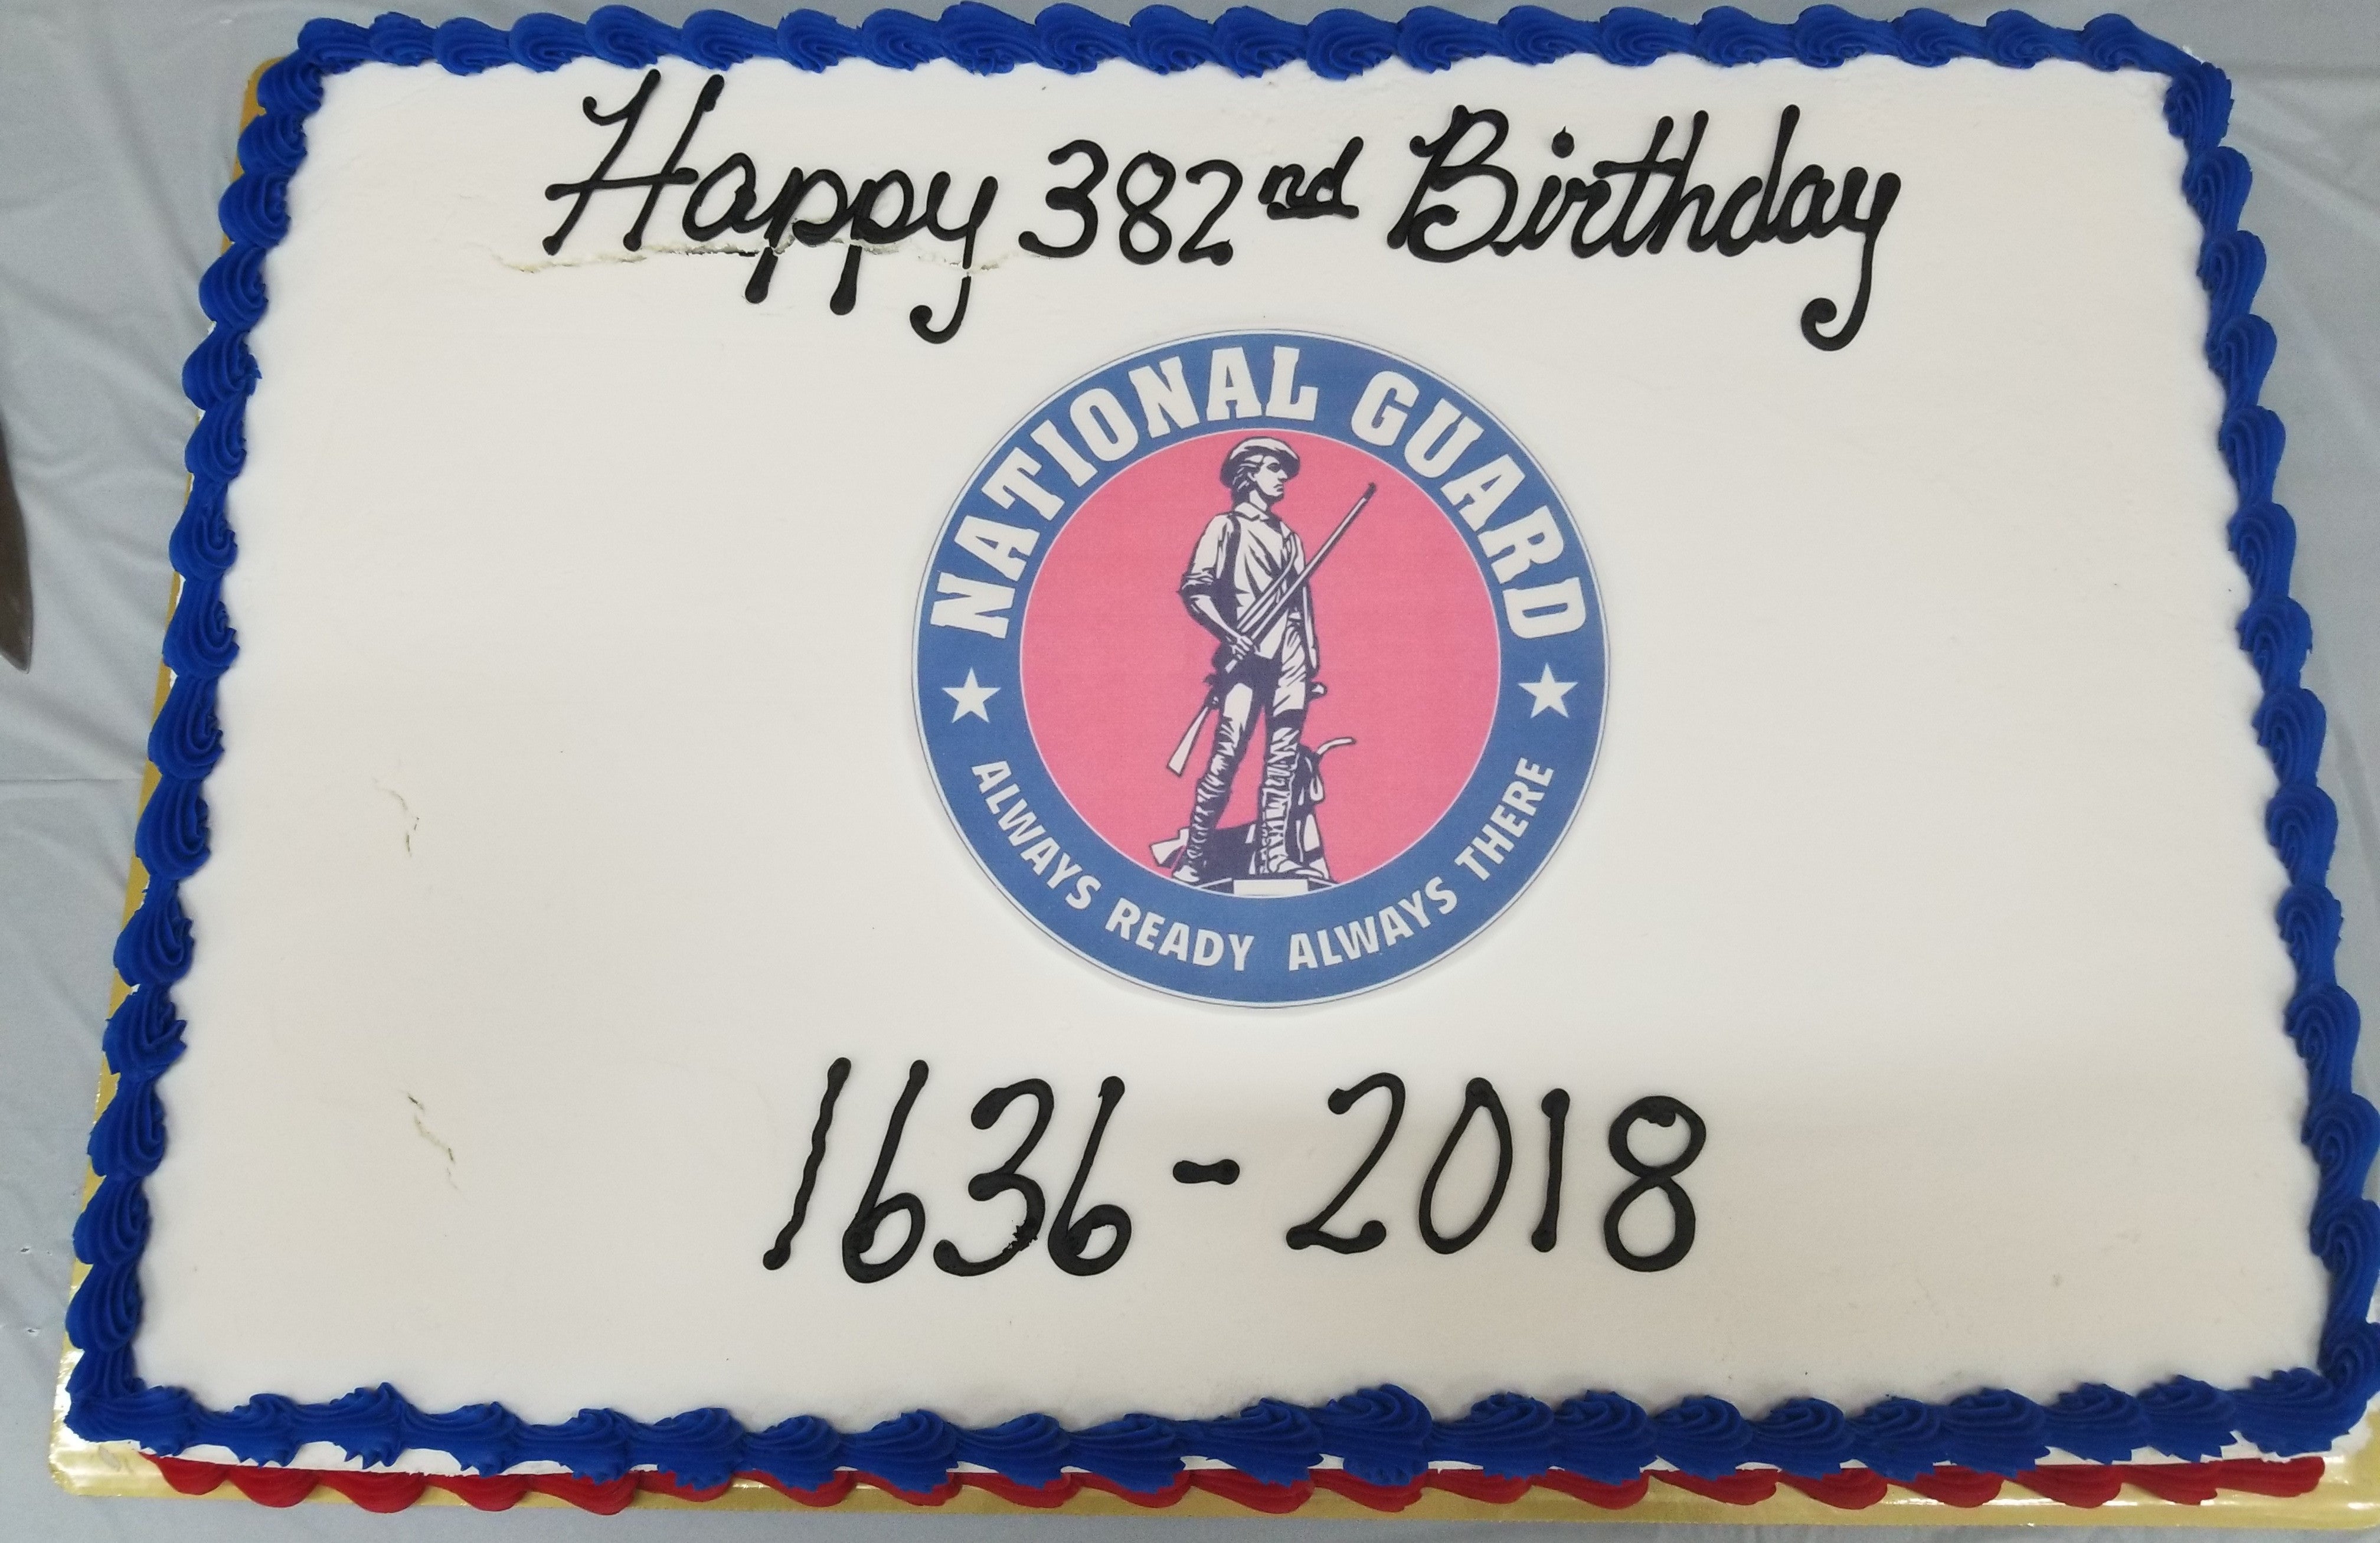 Happy Birthday National Guard